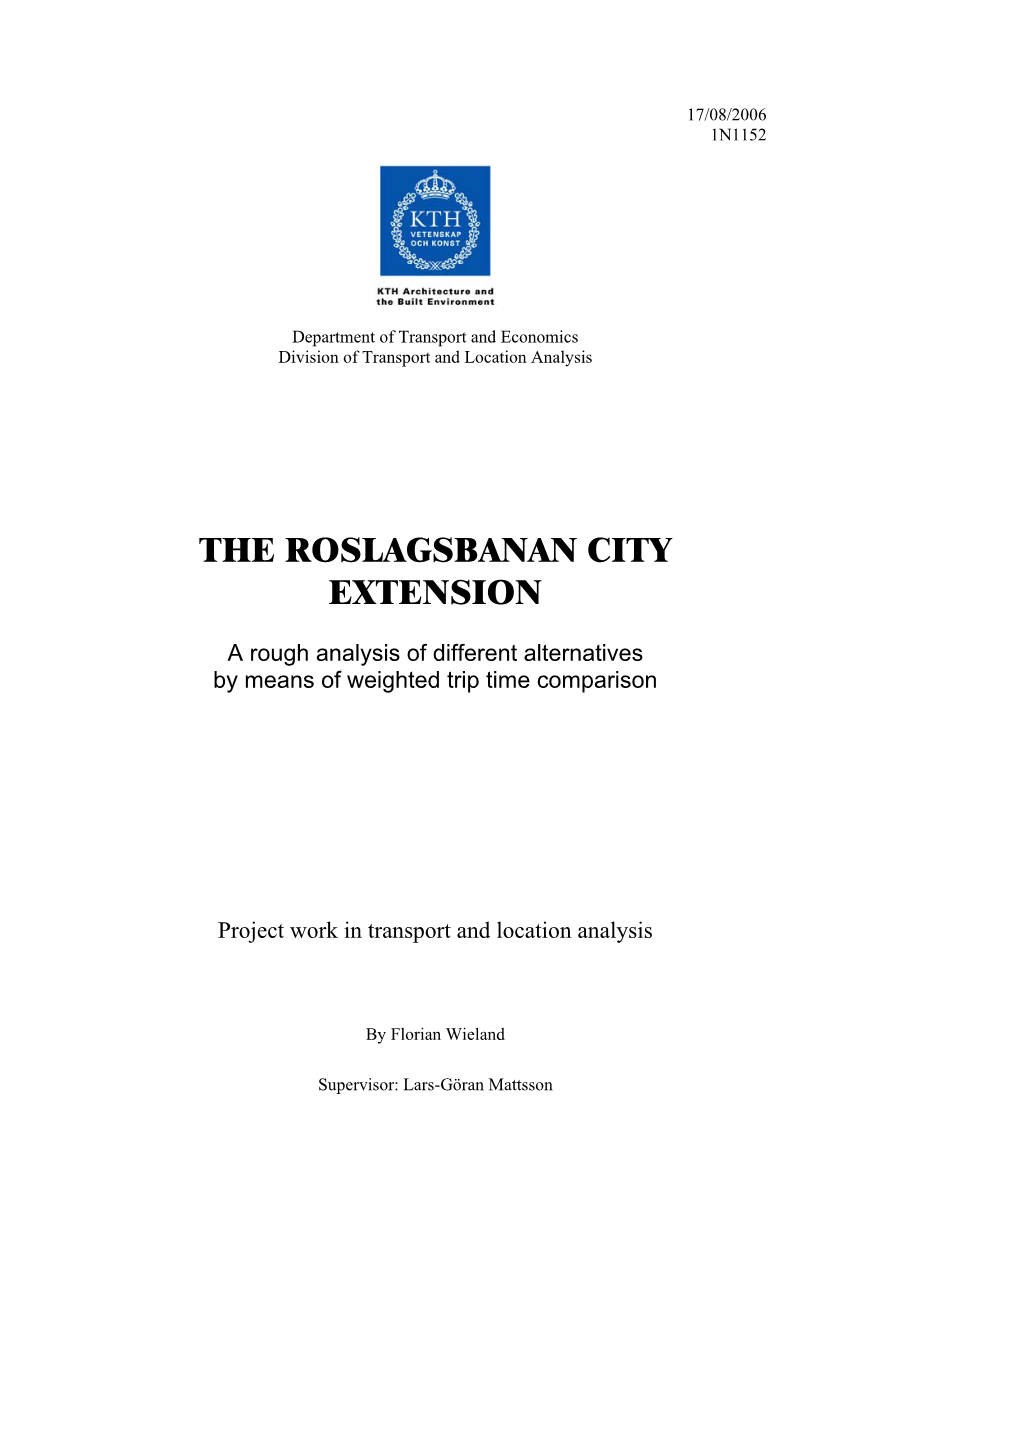 The Roslagsbanan City Extension